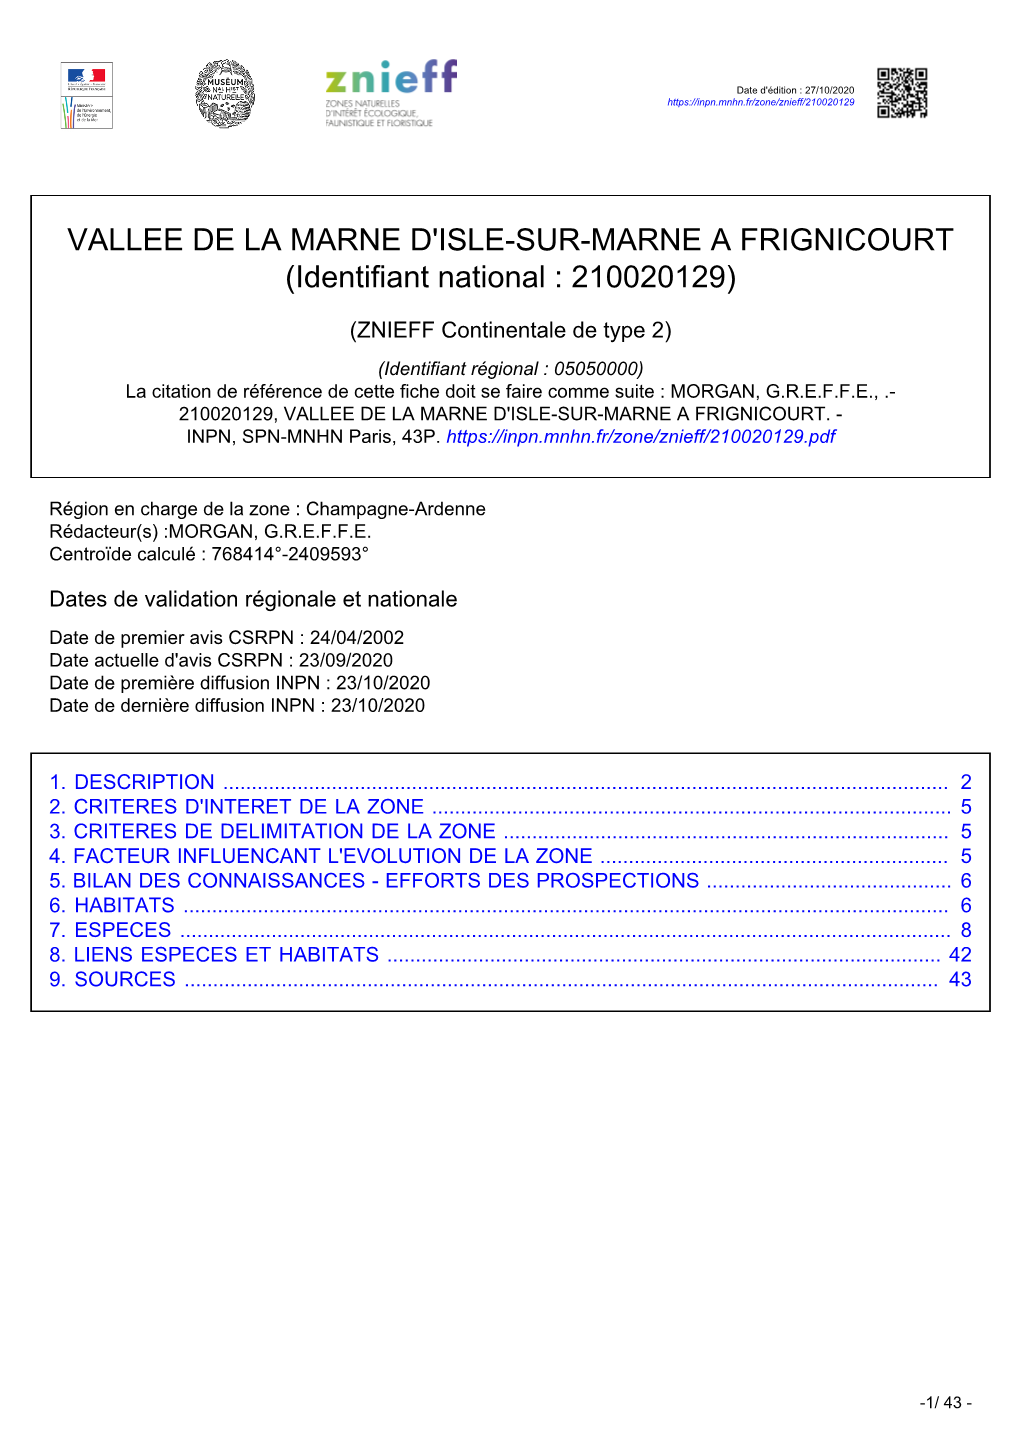 VALLEE DE LA MARNE D'isle-SUR-MARNE a FRIGNICOURT (Identifiant National : 210020129)